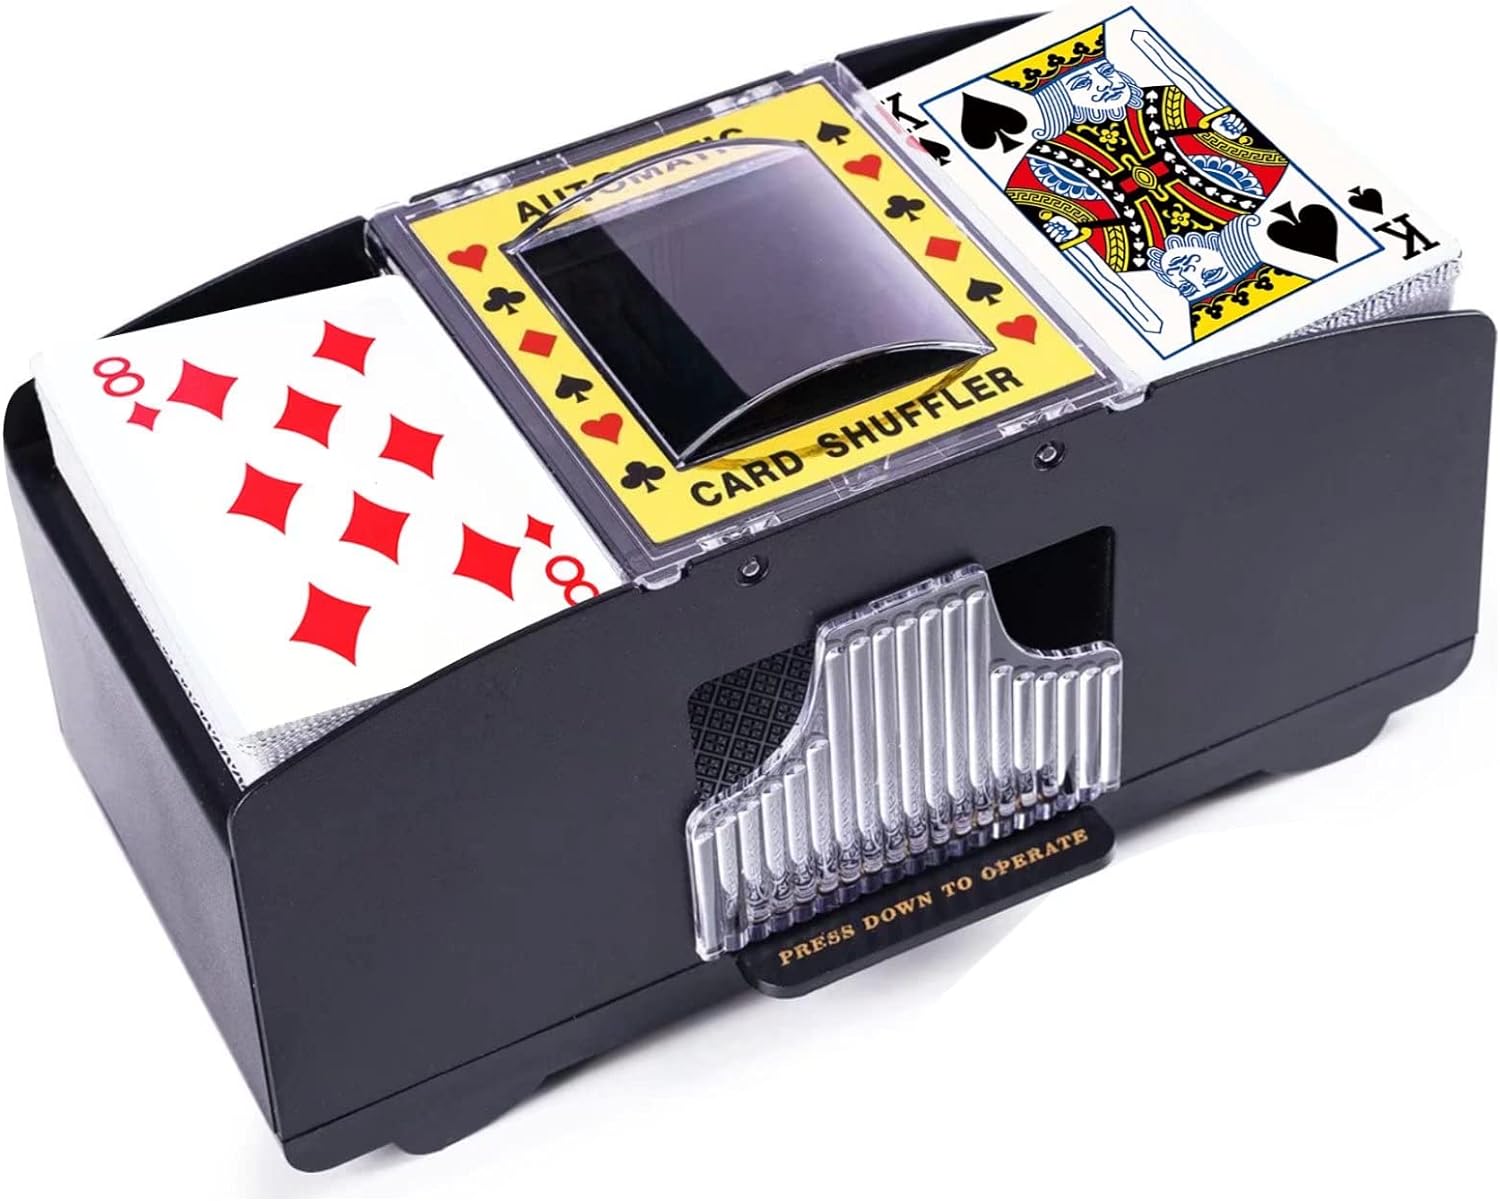 5-best-card-shufflers